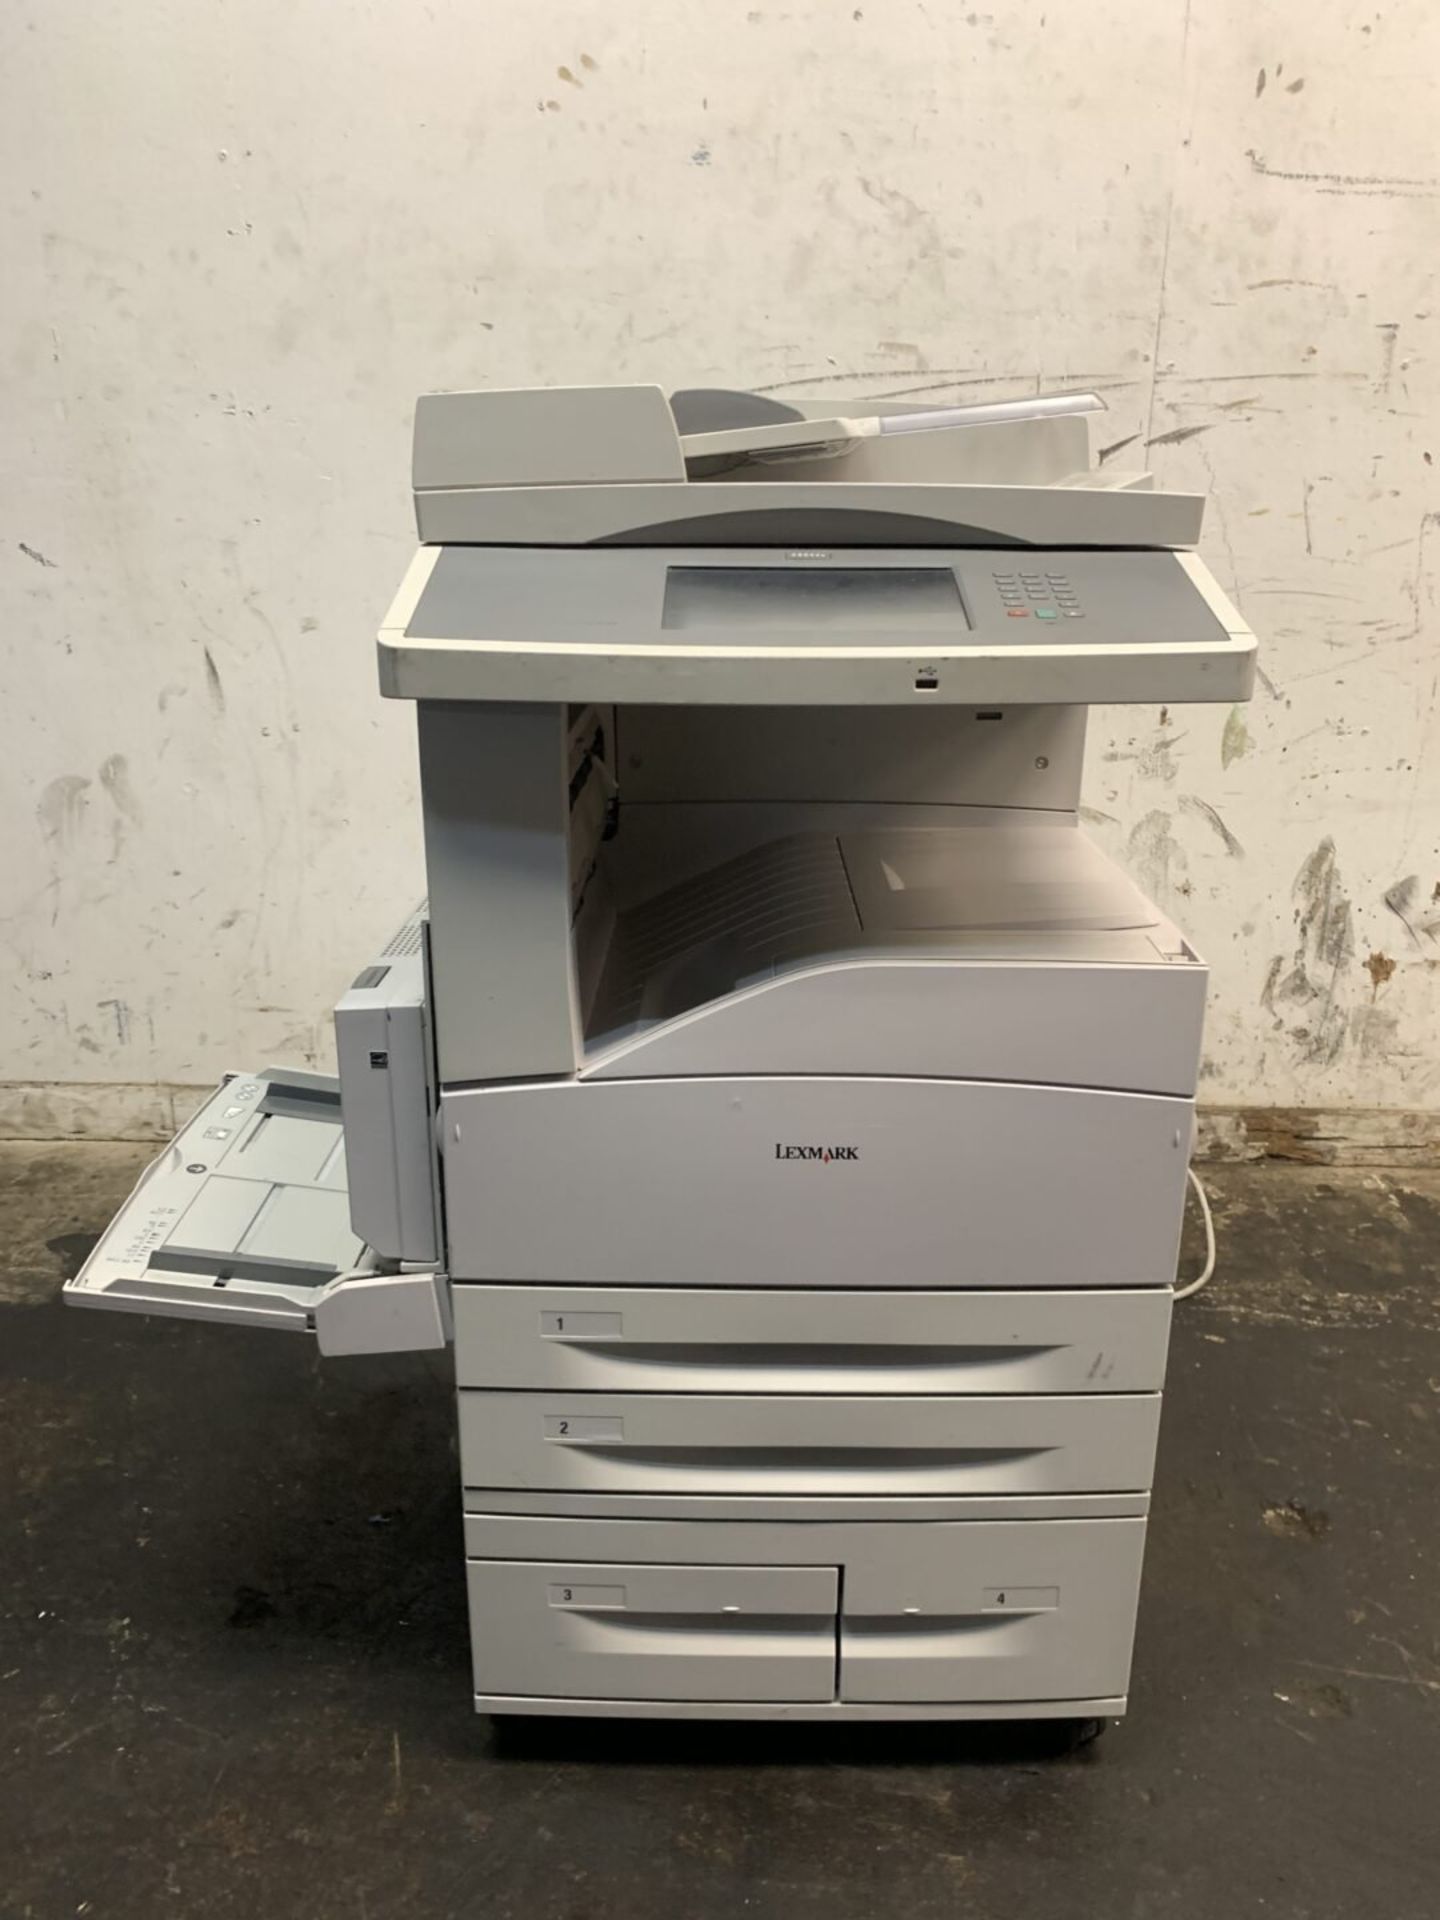 Lexmark X864de Multifunction Printer, S/N 240580 - Image 2 of 15